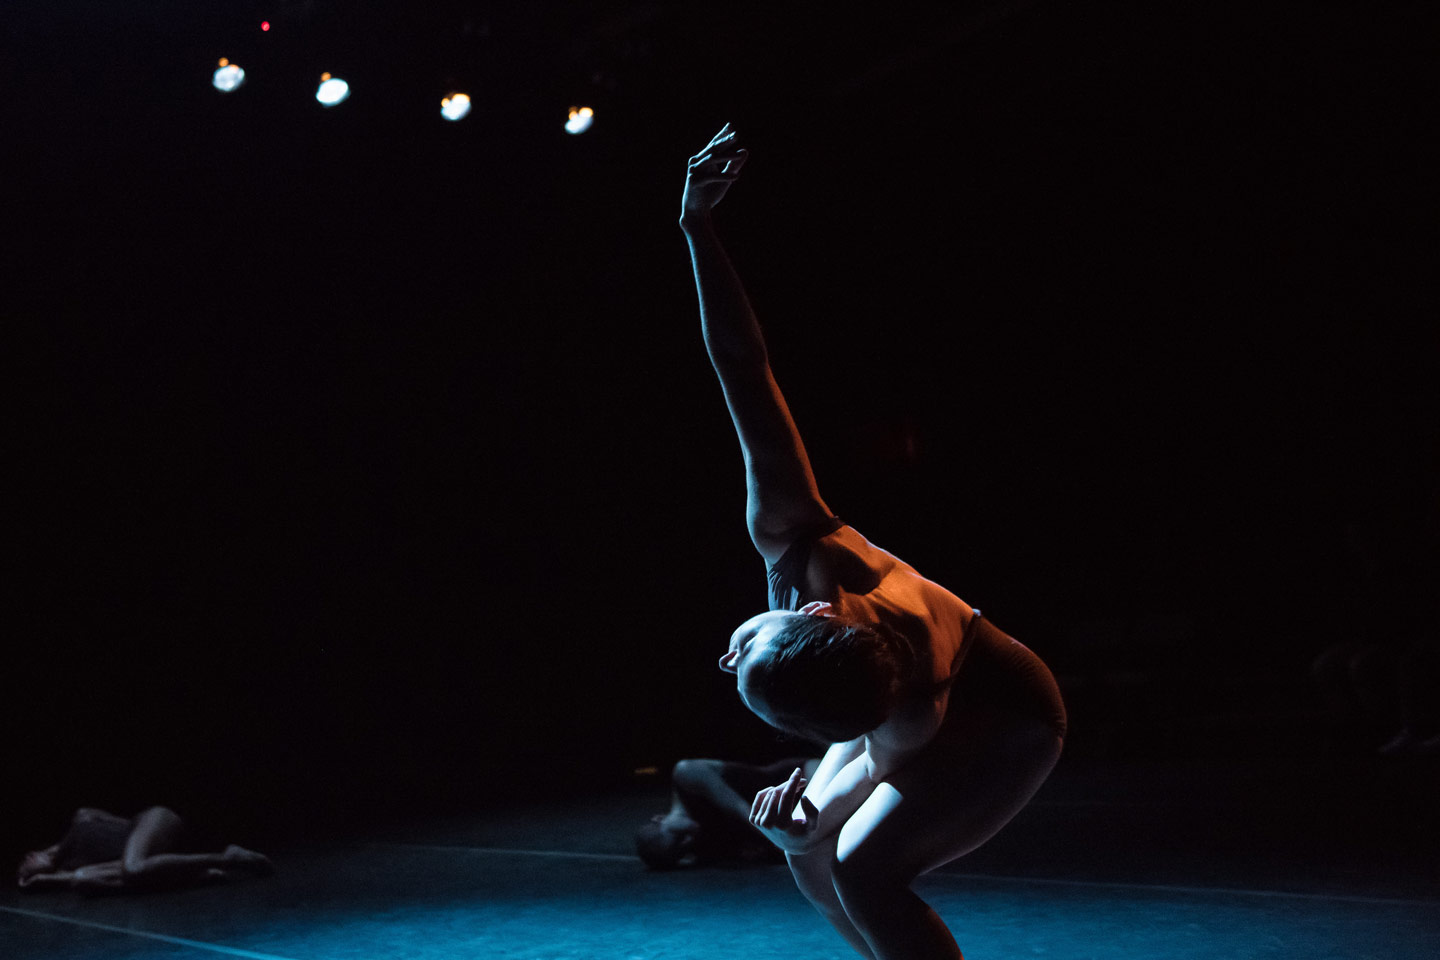 push/FOLD dancer Liane Burns performing at Union PDX - Festival:19 at the Hampton Opera Center in Portland, Oregon | Photographer: Jingzi Zhao